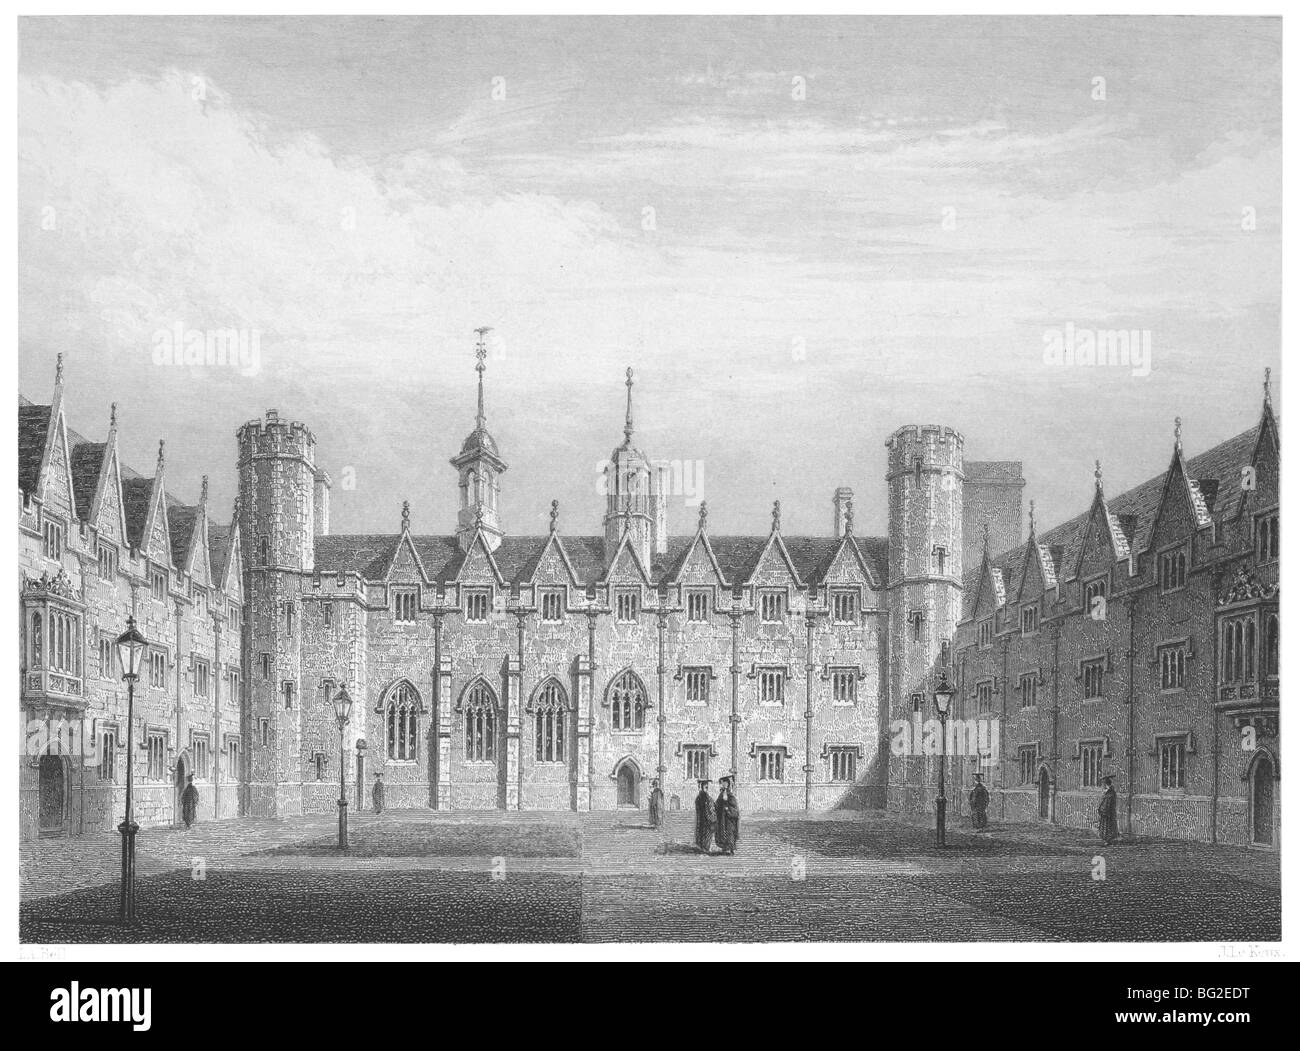 St John's College, Cambridge - segundo corte Foto de stock